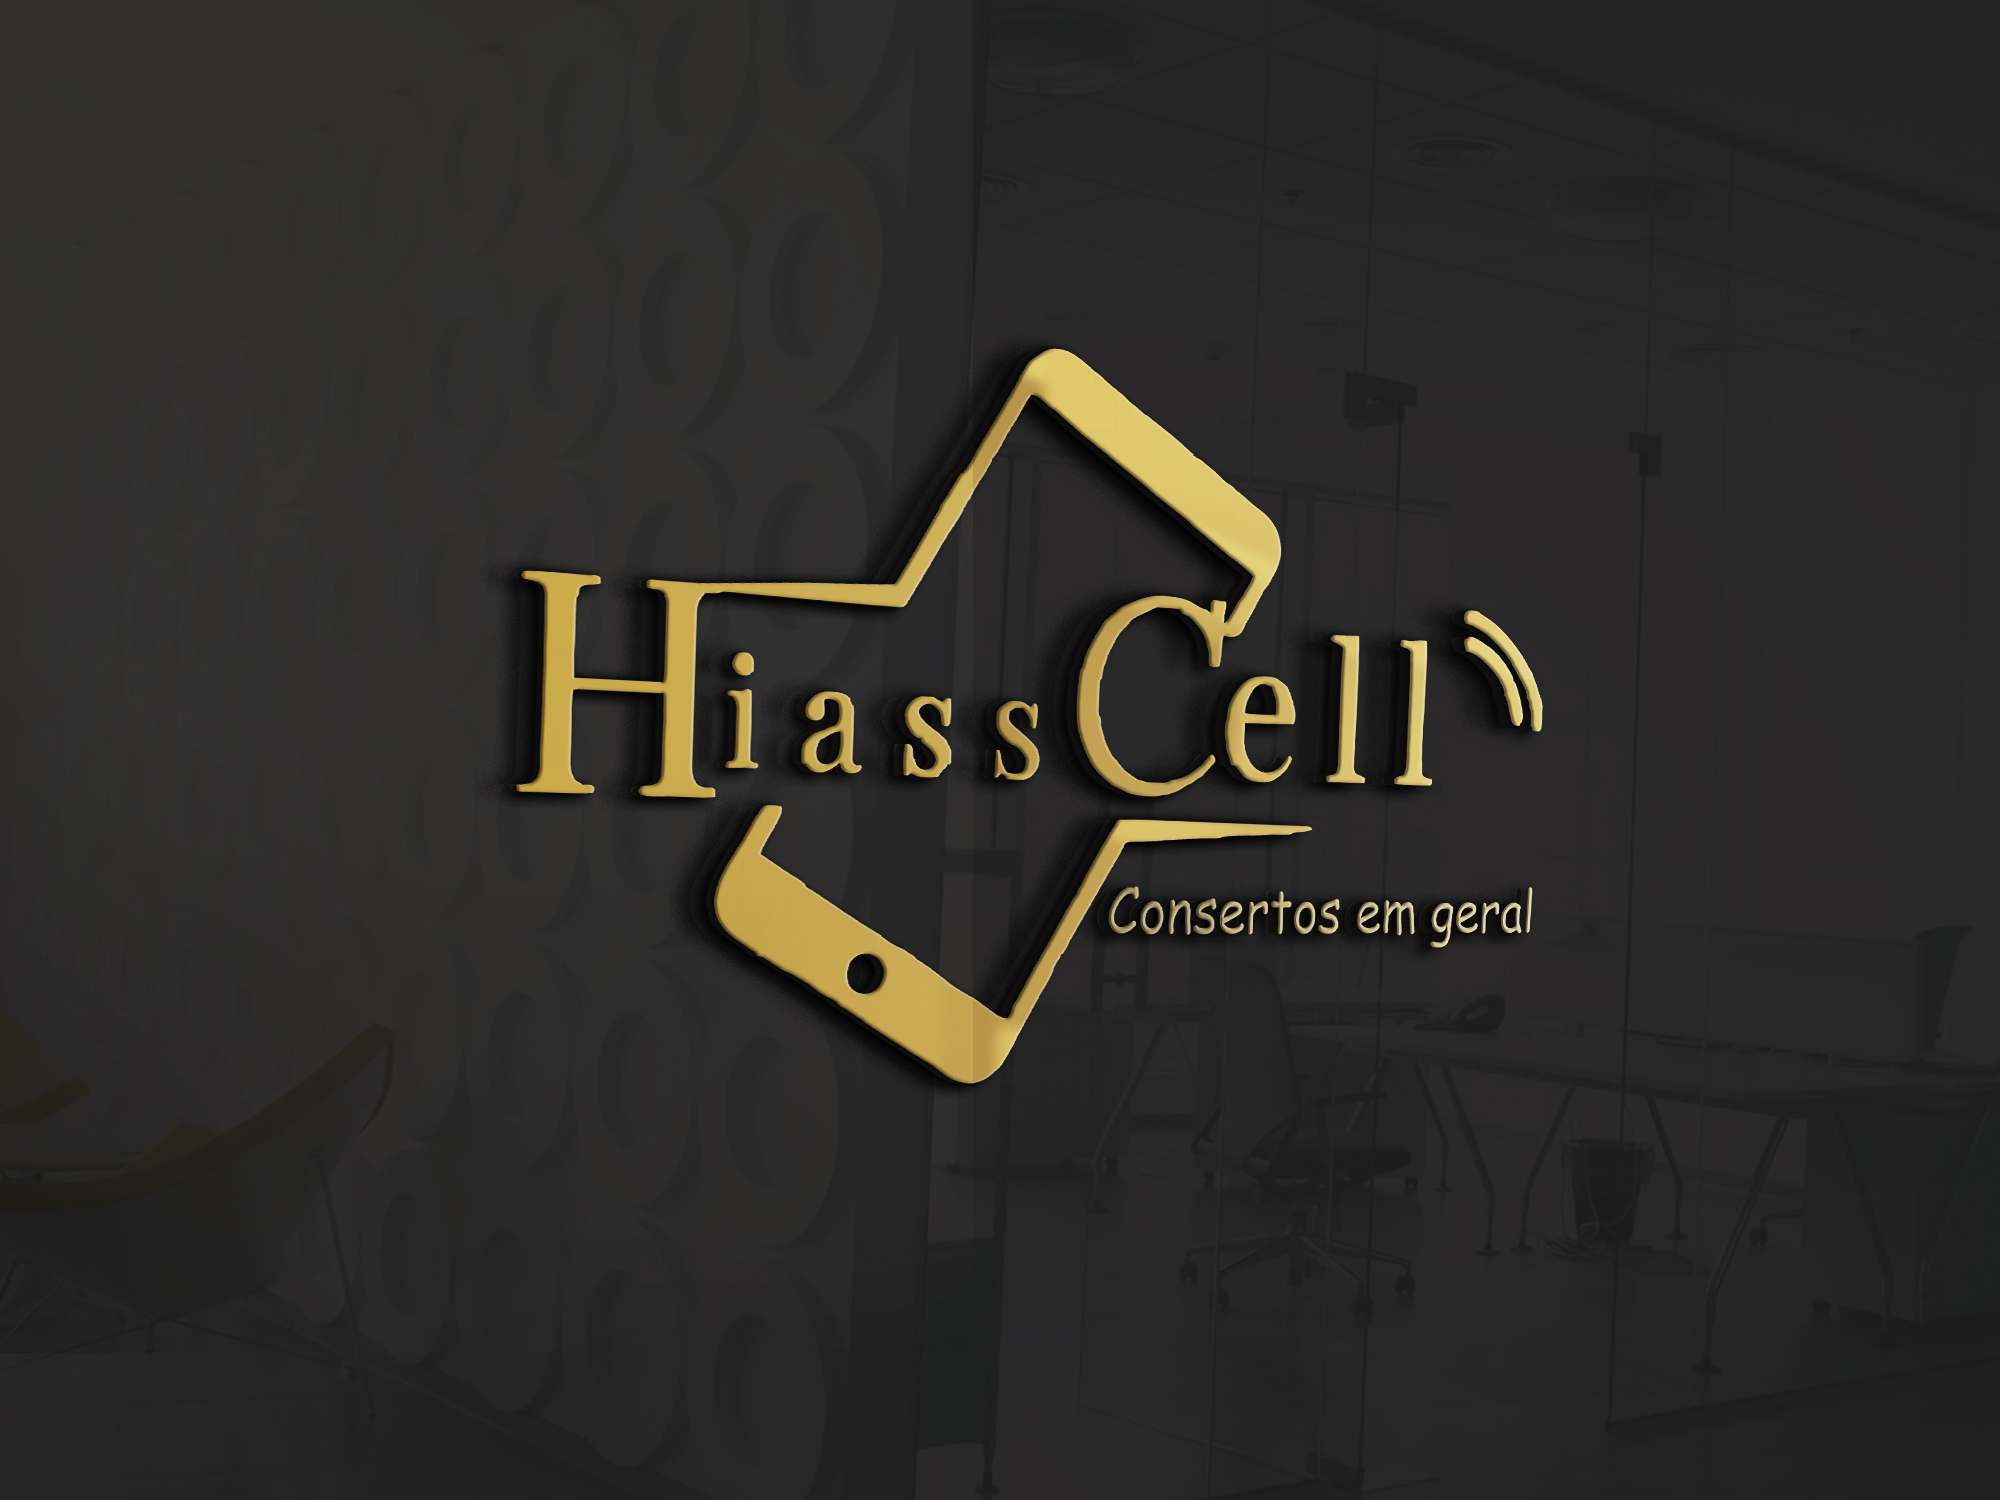 Hiass Cell